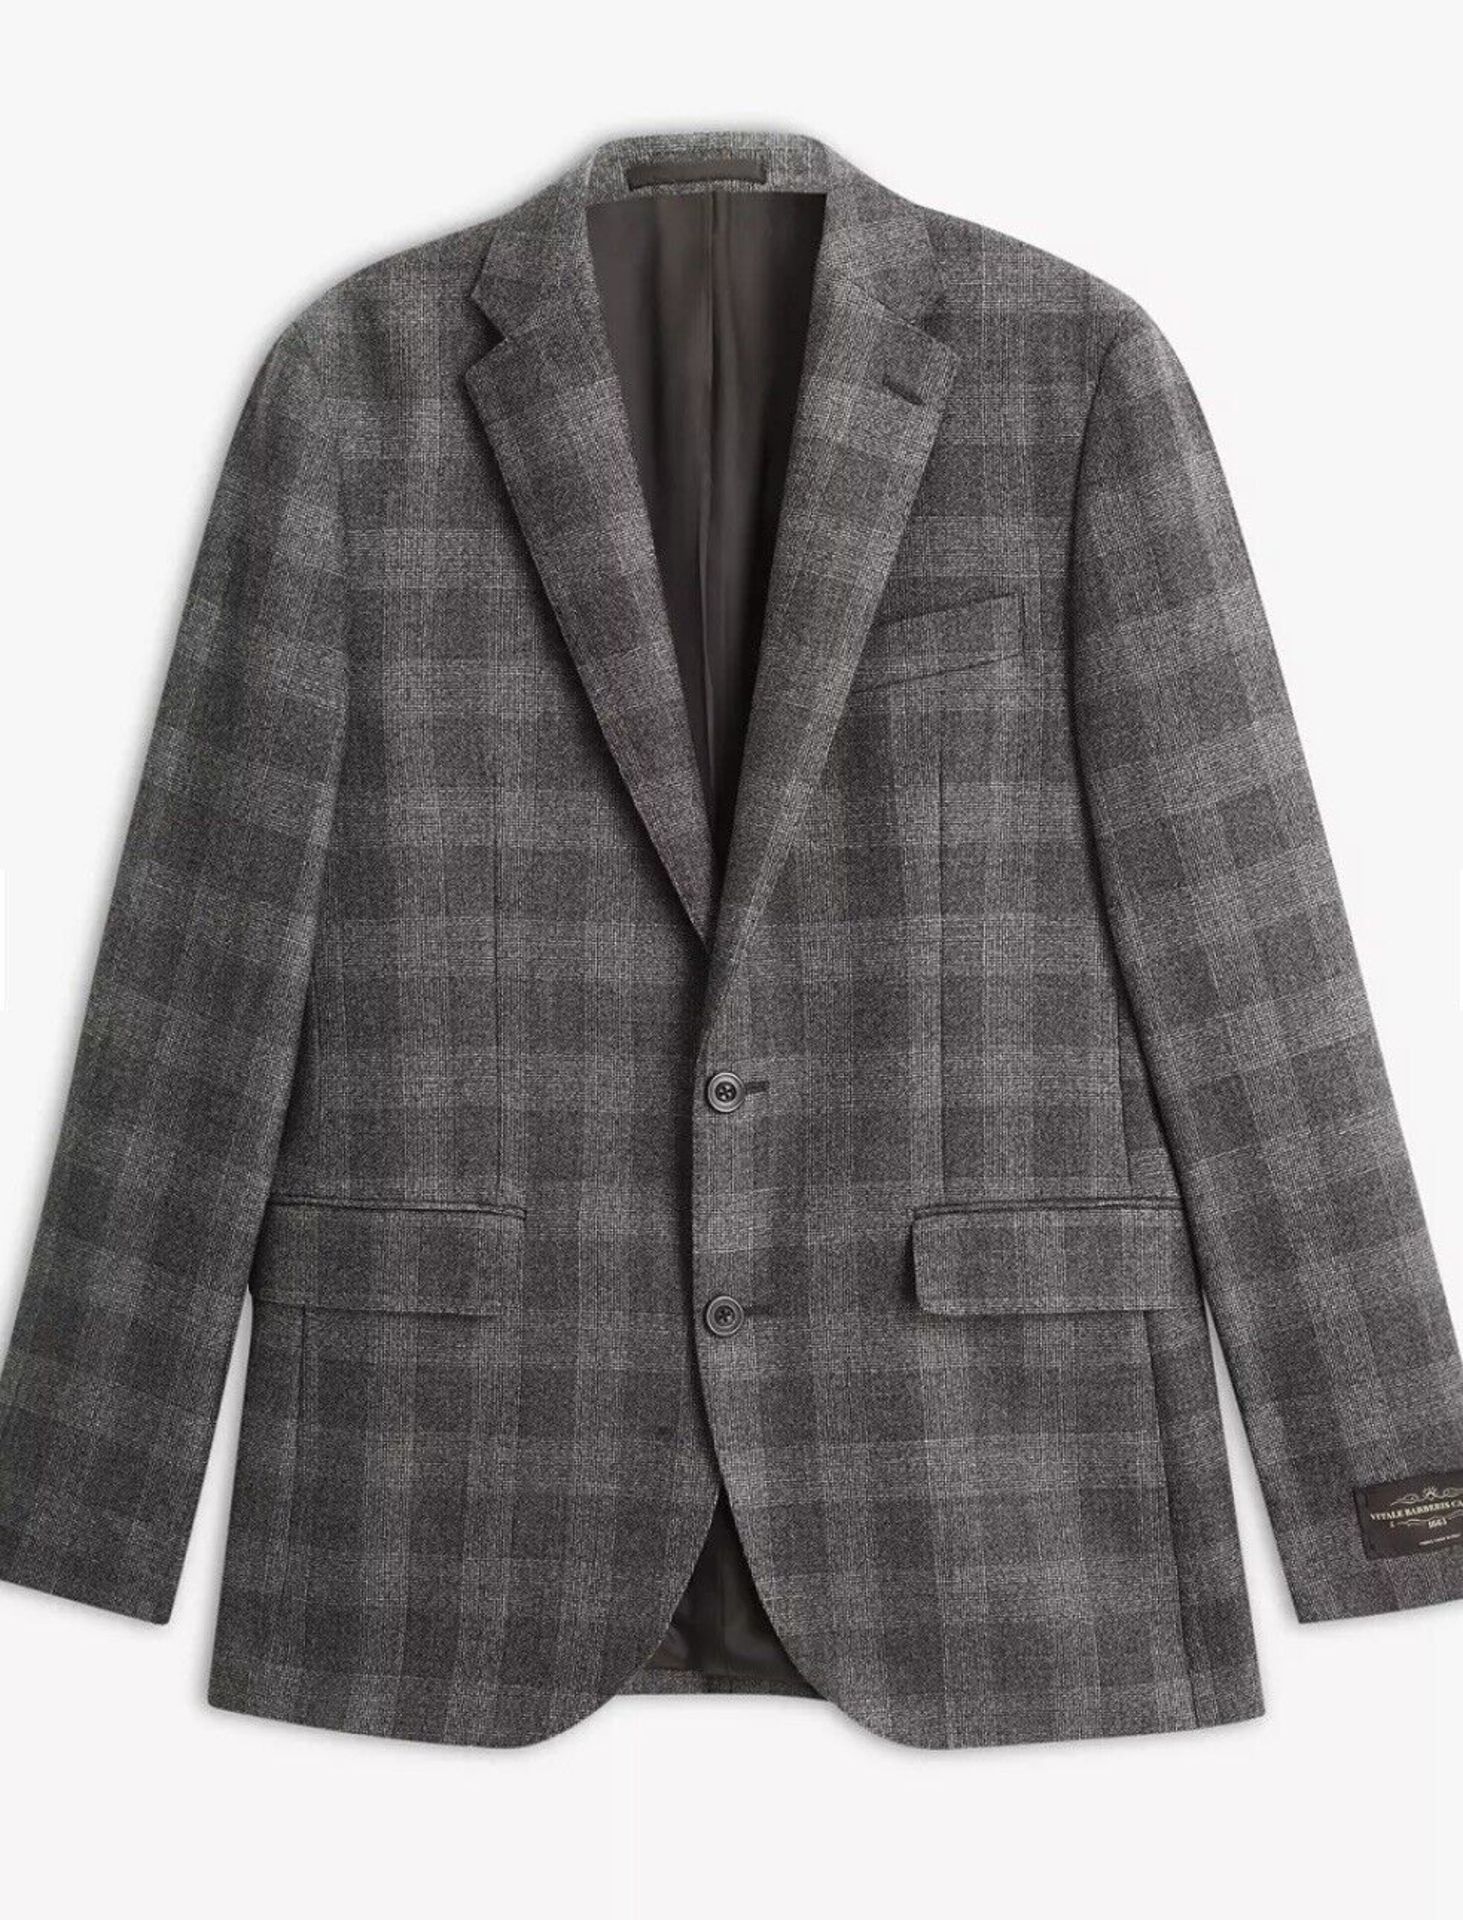 25 x Brand New Barberis Saxony Regular Fit Suit Jackets Total RRP £1850 - Bild 3 aus 6